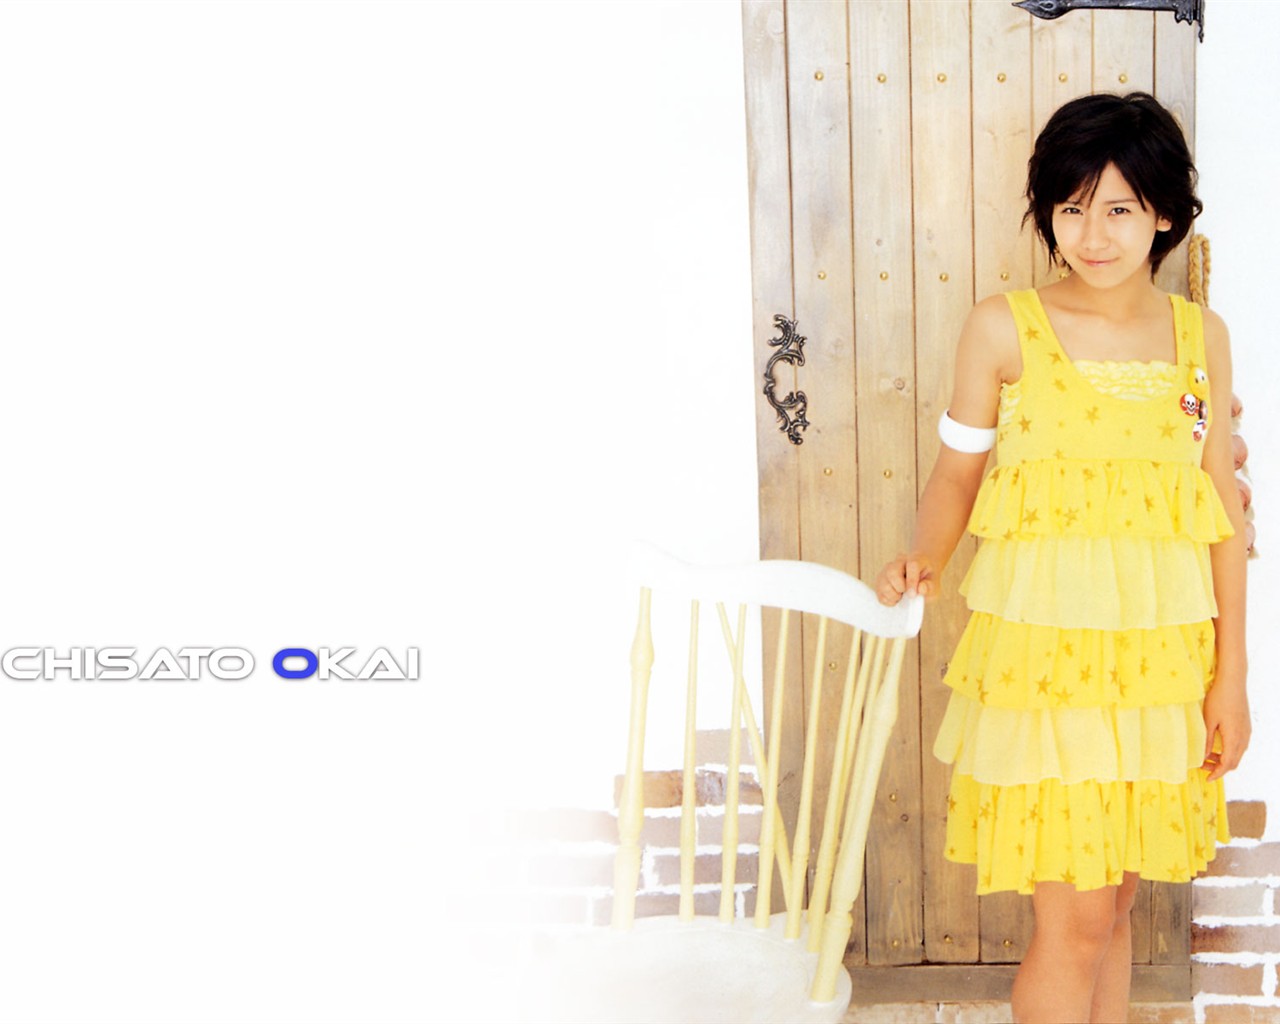 Cute Japanese beauty photo portfolio #6 - 1280x1024